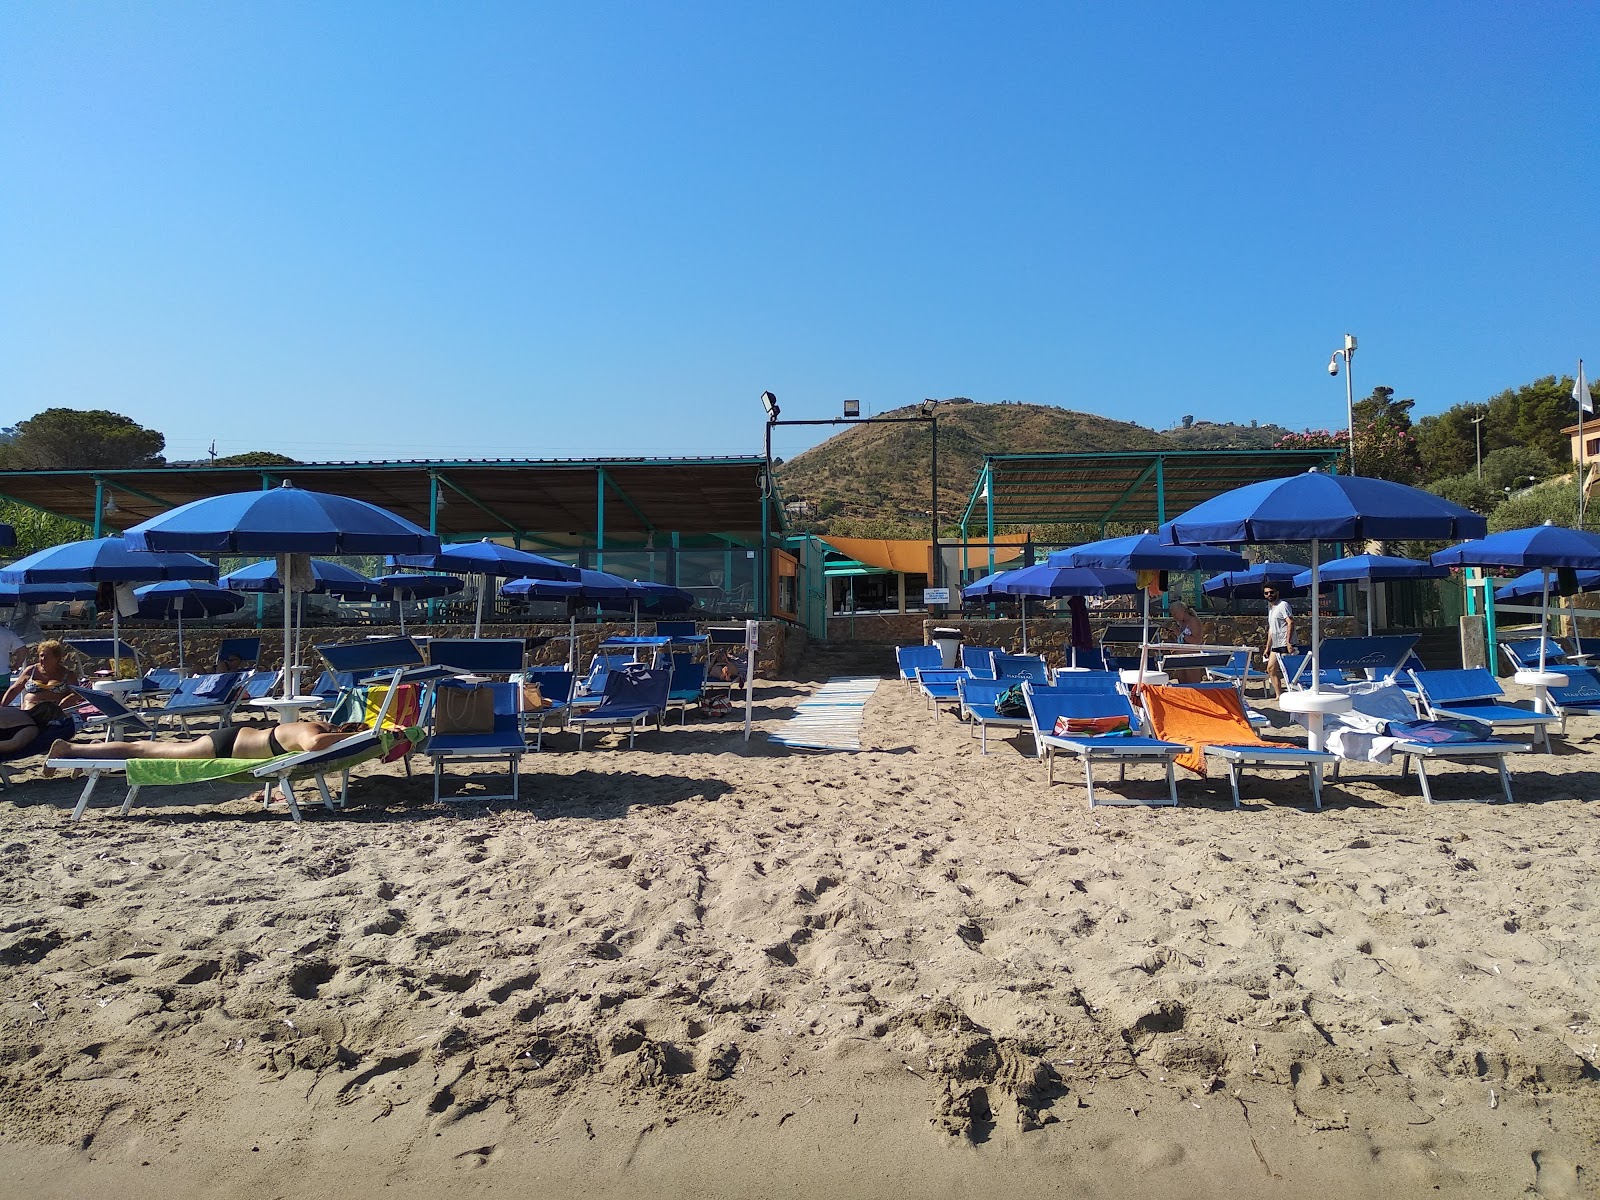 Foto de Spiaggia Di Mazzaforno - lugar popular entre os apreciadores de relaxamento